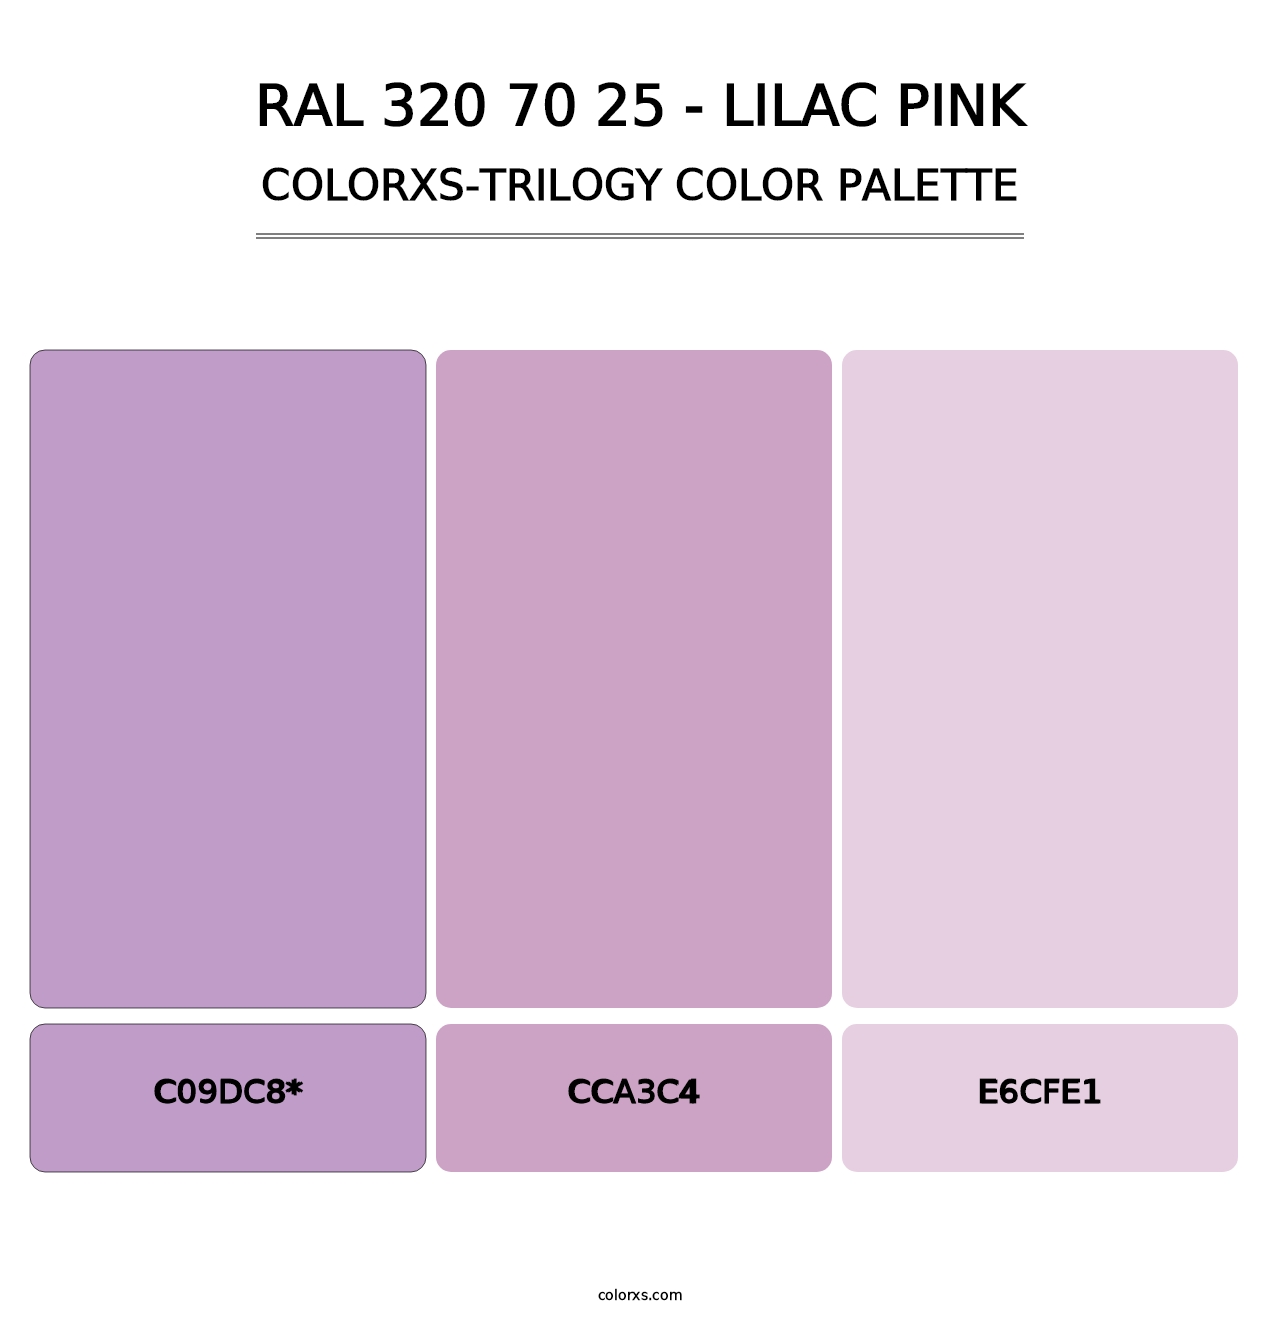 RAL 320 70 25 - Lilac Pink - Colorxs Trilogy Palette